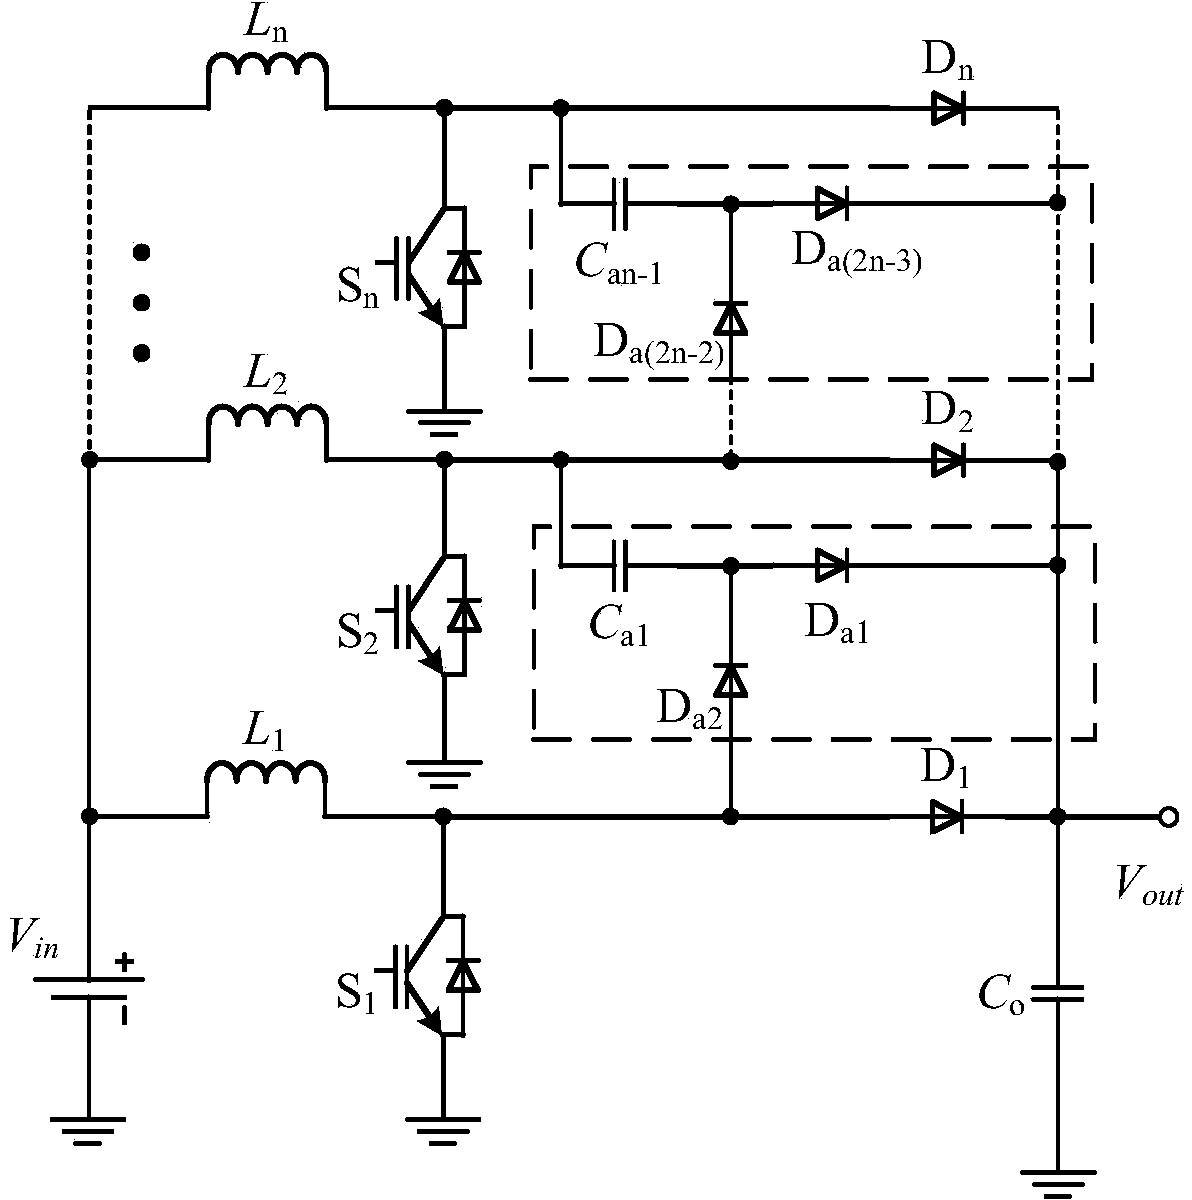 Interleaved Boost converter comprising lossless buffer circuit